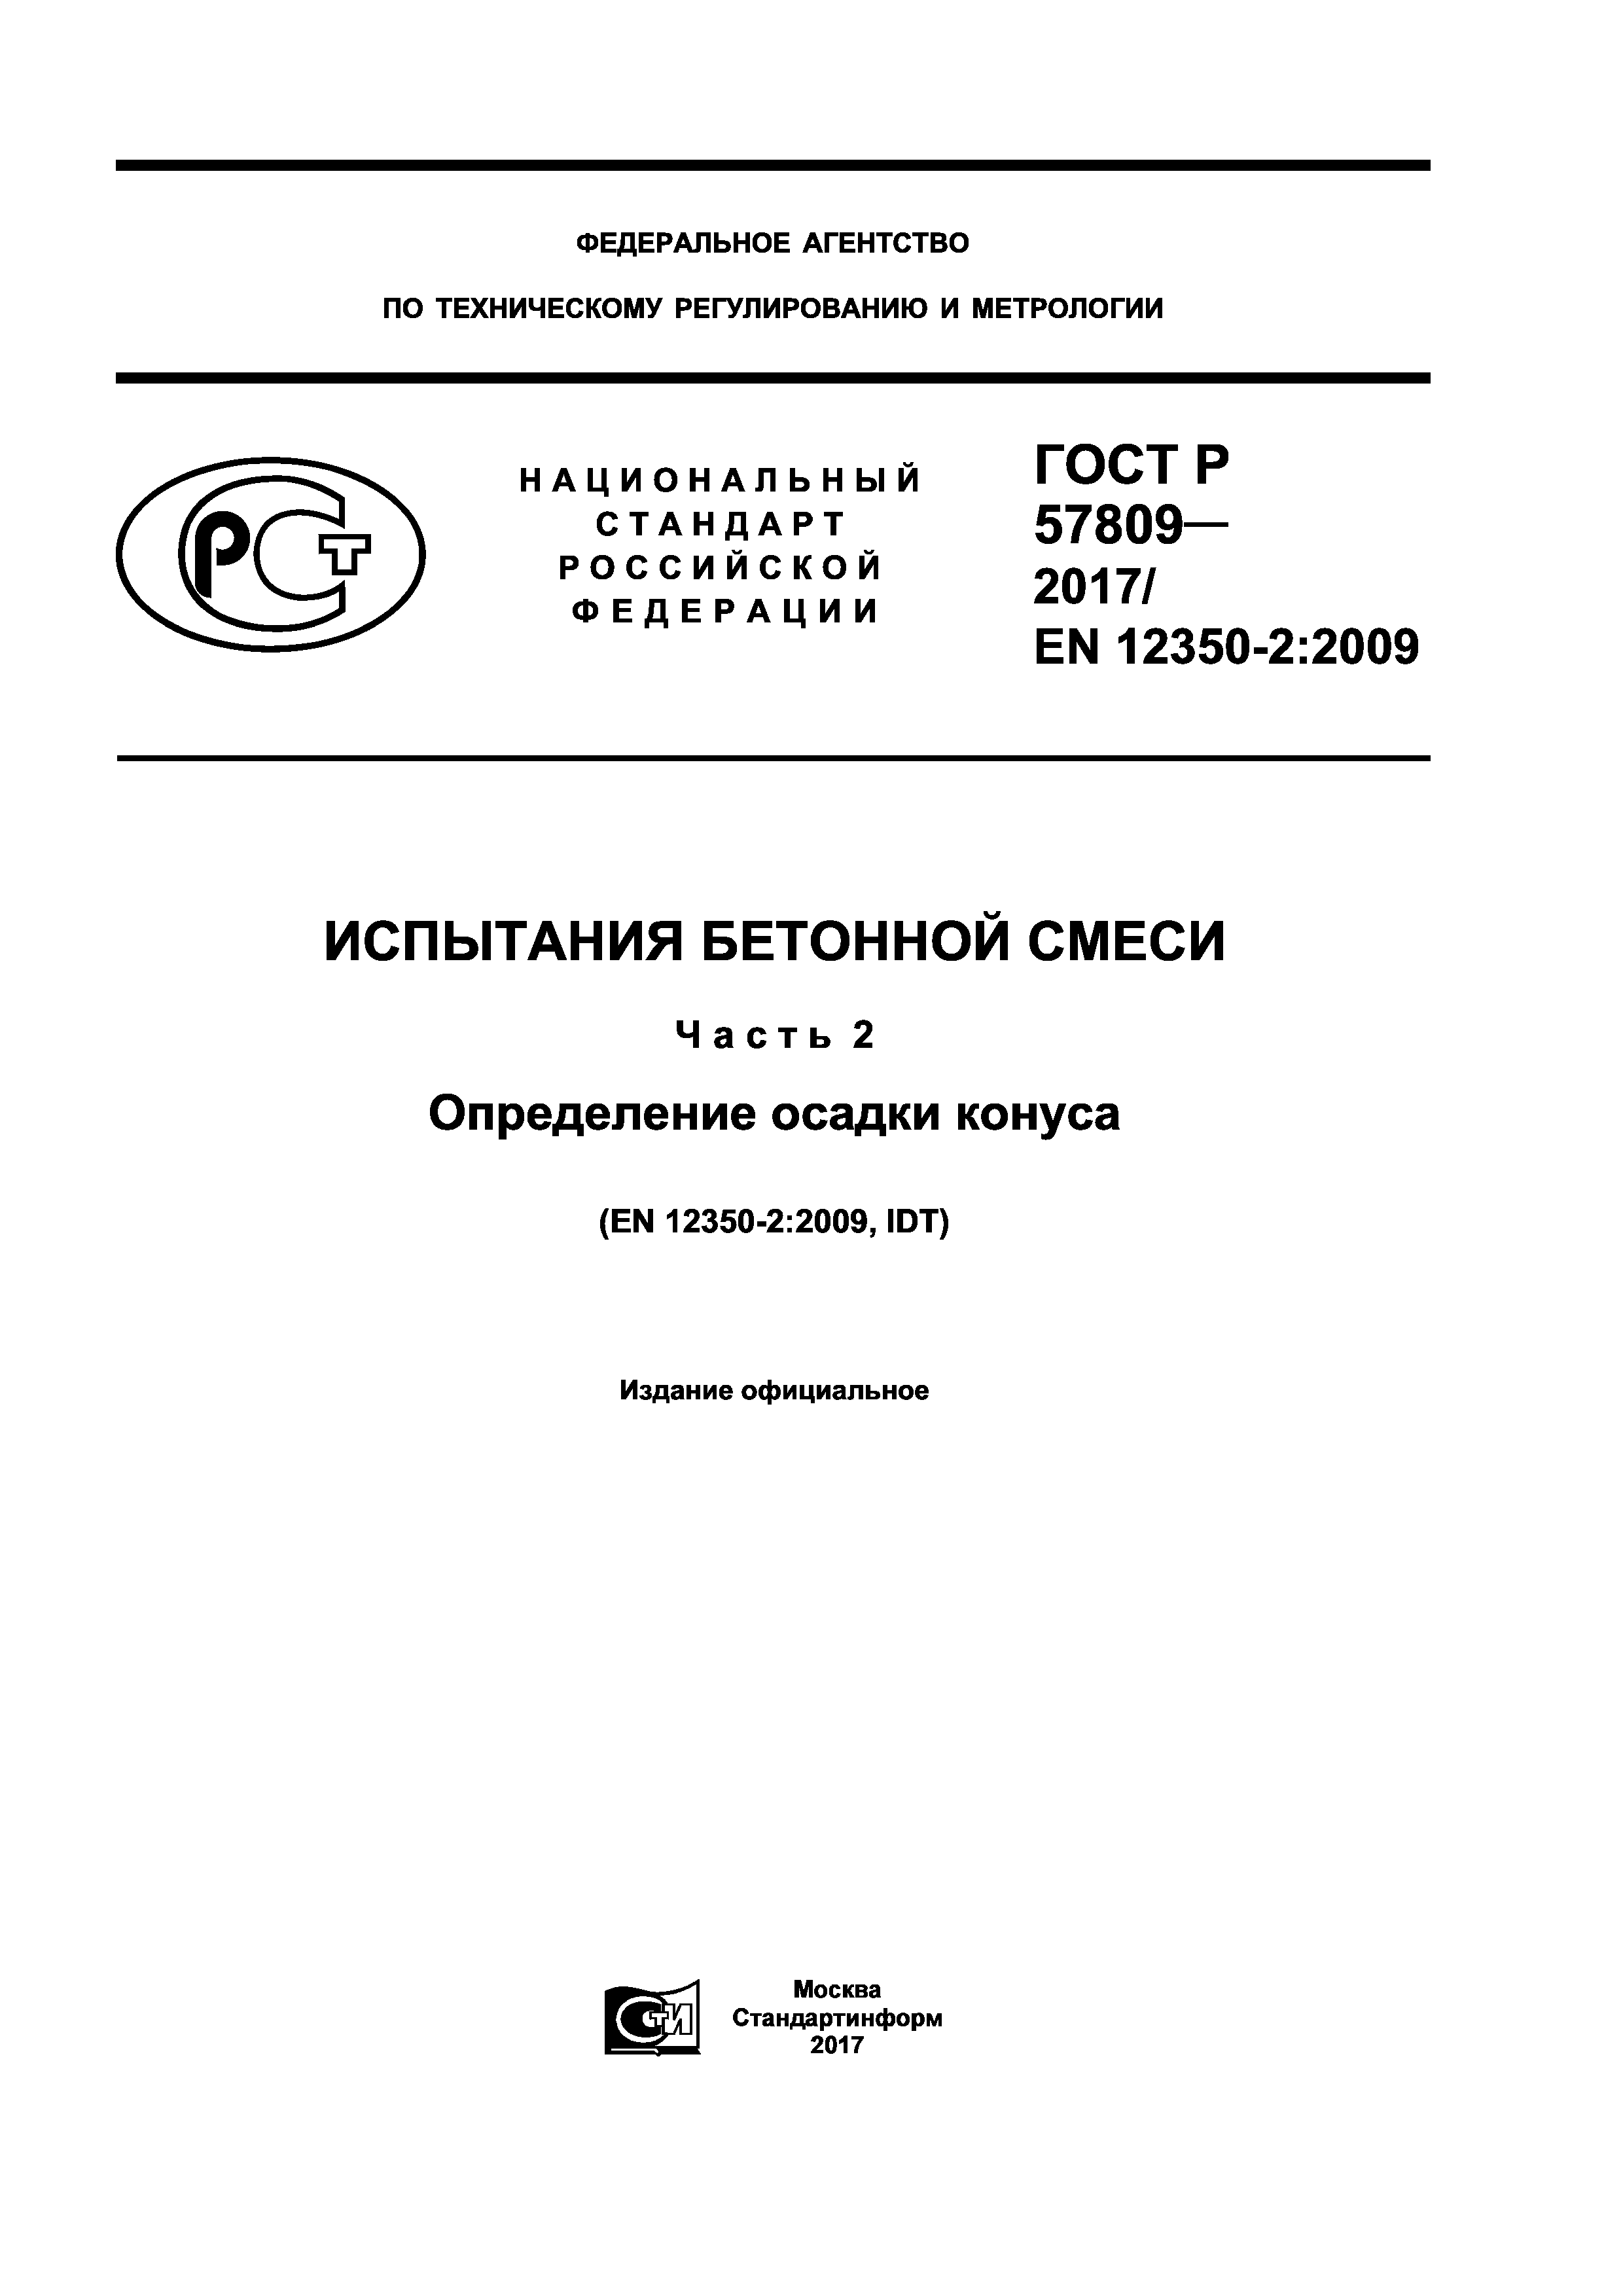 ГОСТ Р 57809-2017